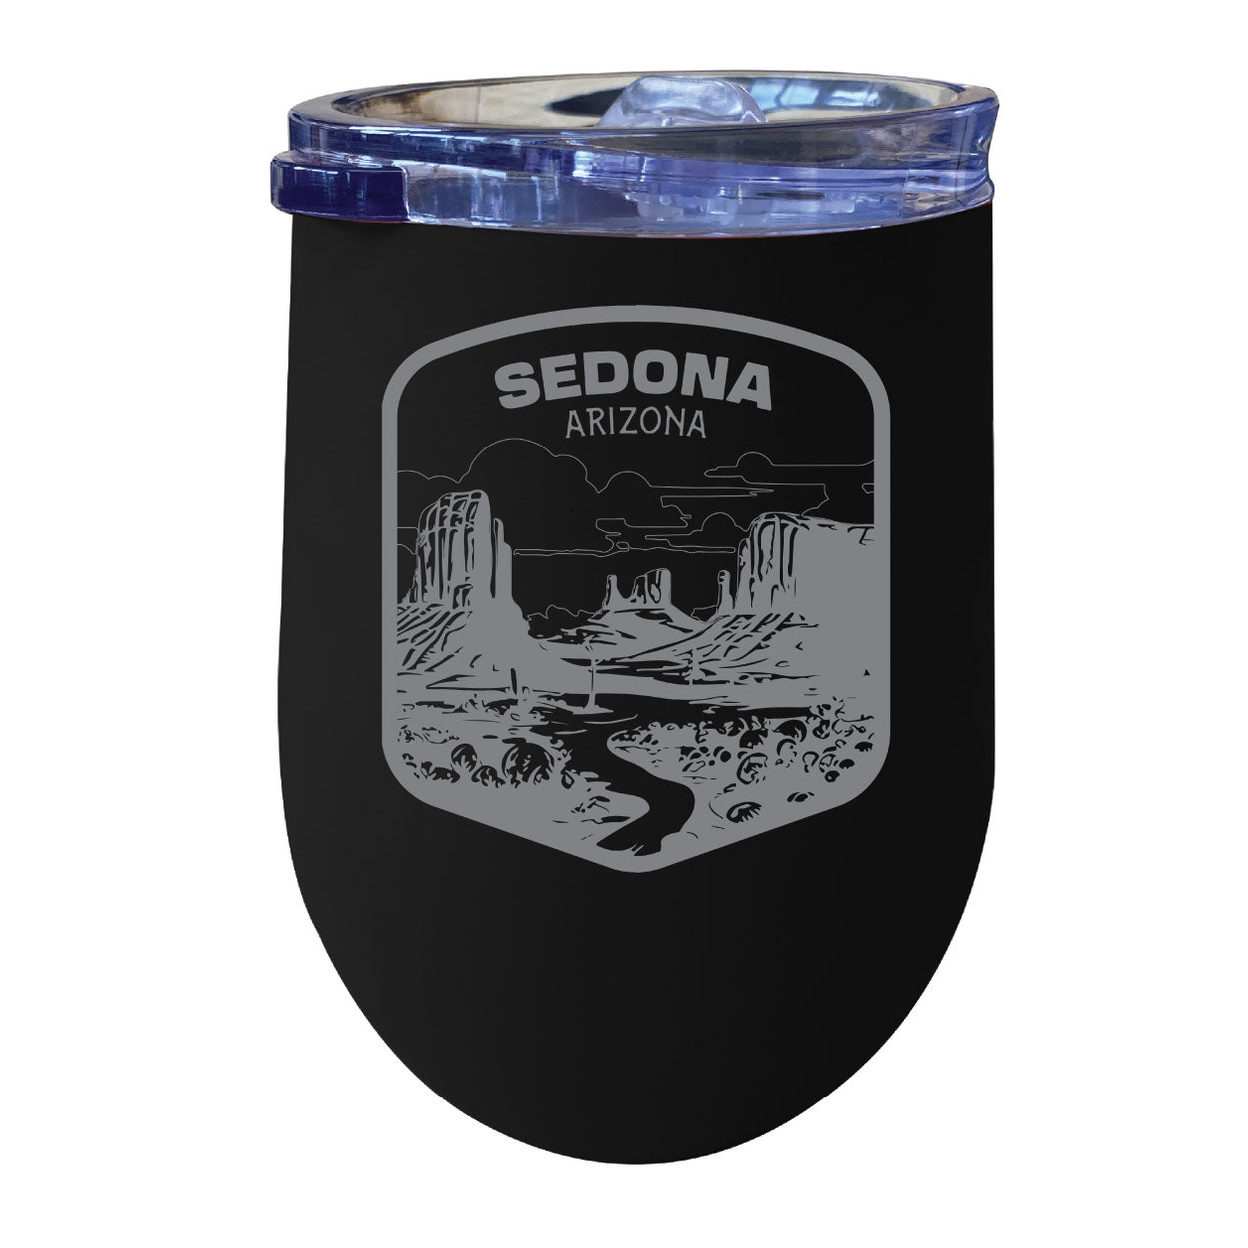 Sedona Arizona Souvenir 12 Oz Engraved Insulated Wine Stainless Steel Tumbler - Black,,2-Pack